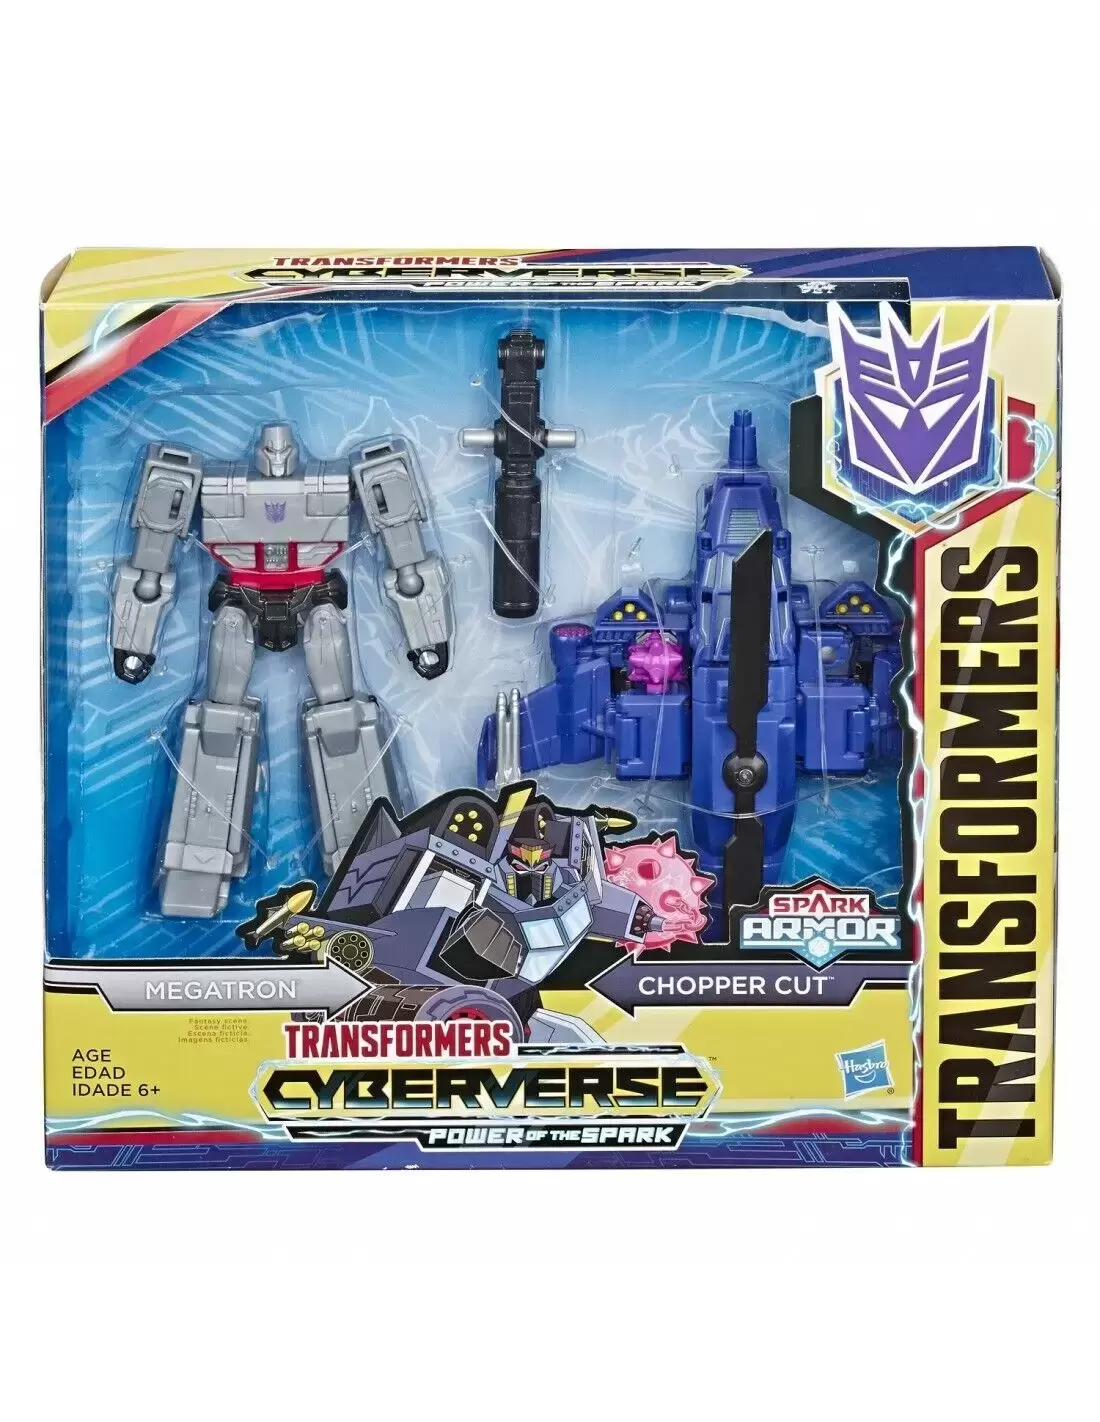 Transformers Cyberverse - Megatron Spark Armor